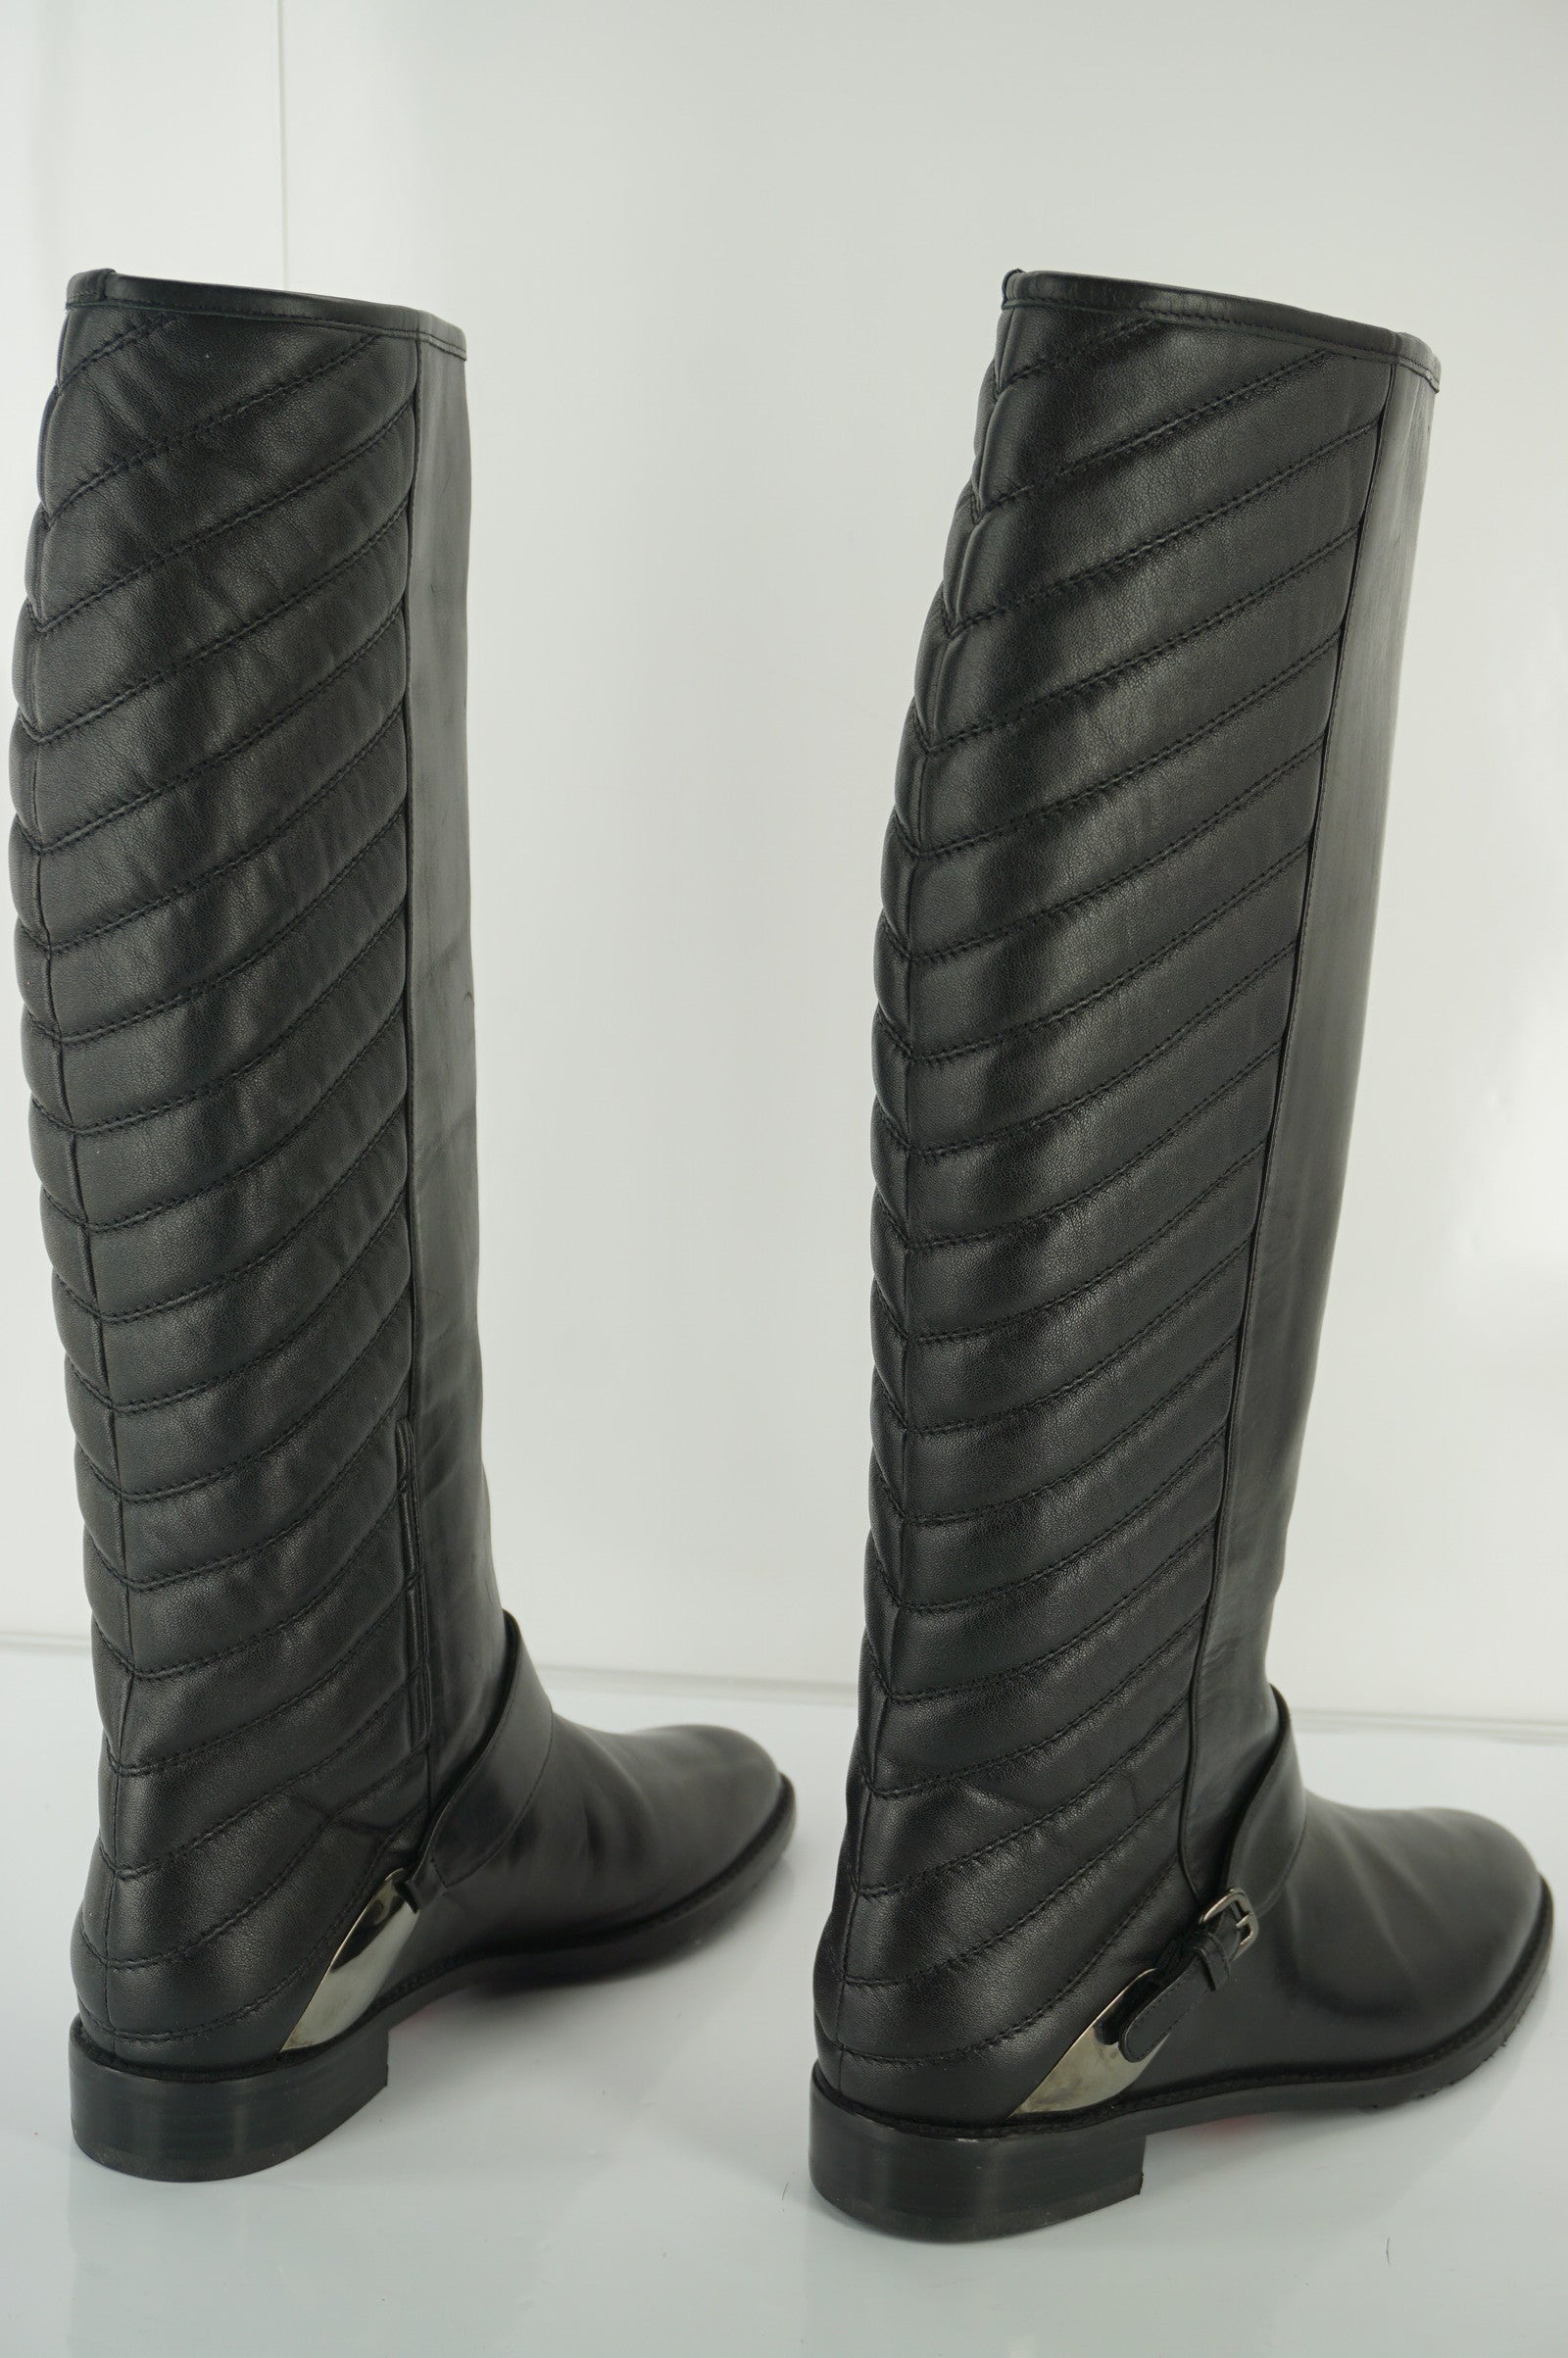 Stuart Weitzman Raceway Black Leather Stretch Back Riding Boot Size 6.5 New $695